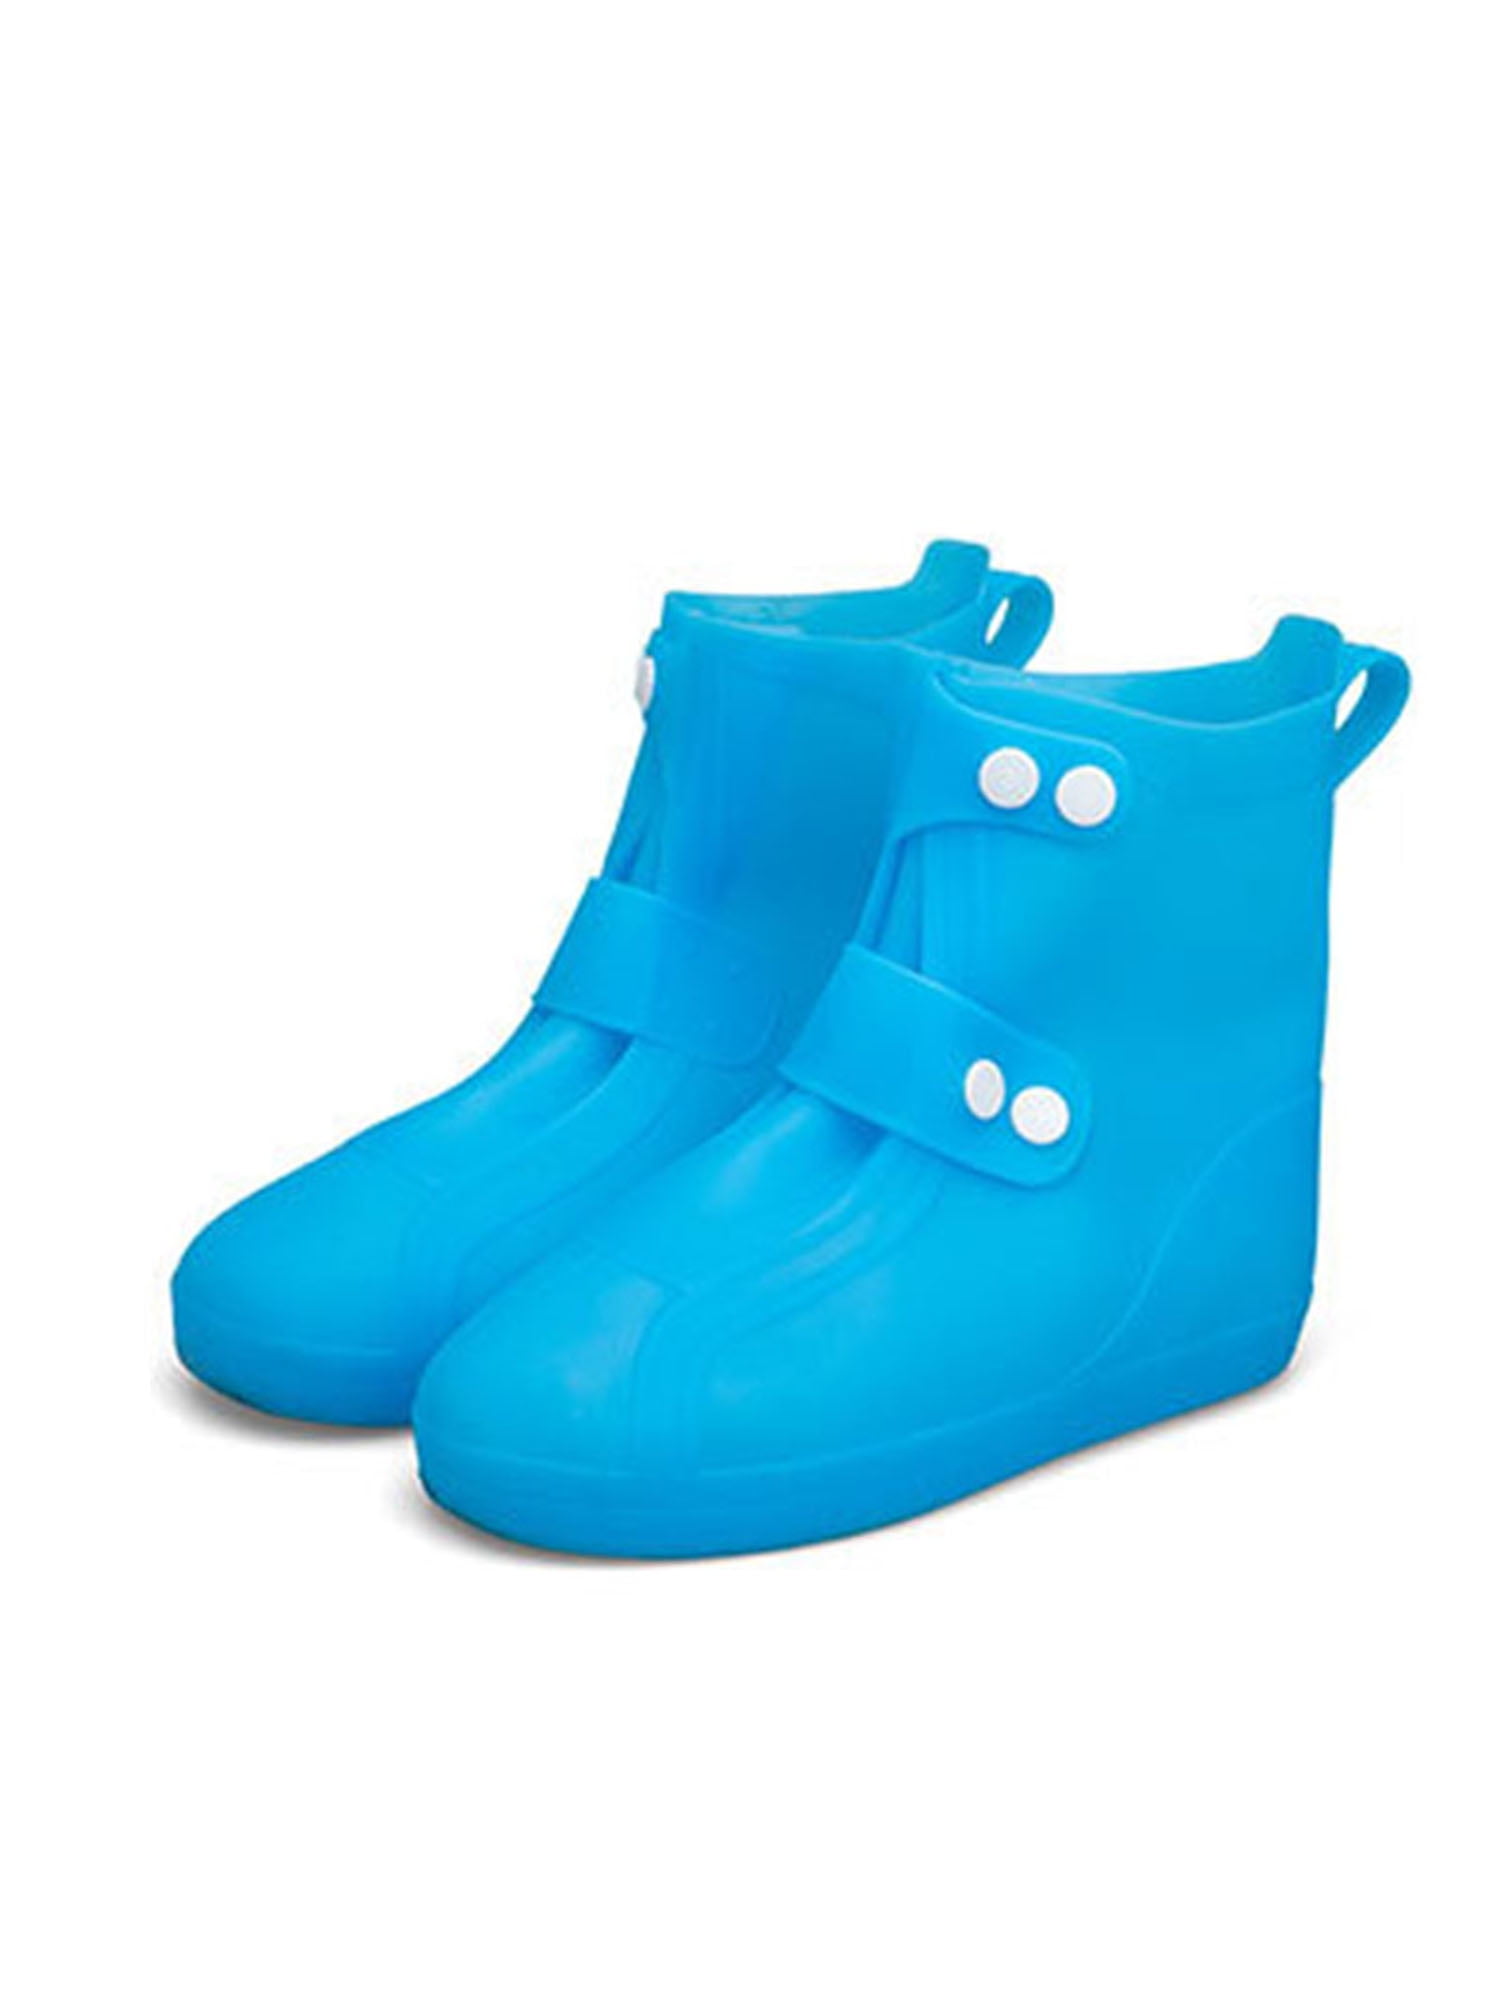 Mens Waterproof Boots Wellies Garden Festival Wellington Boots Rain Shoes Size 